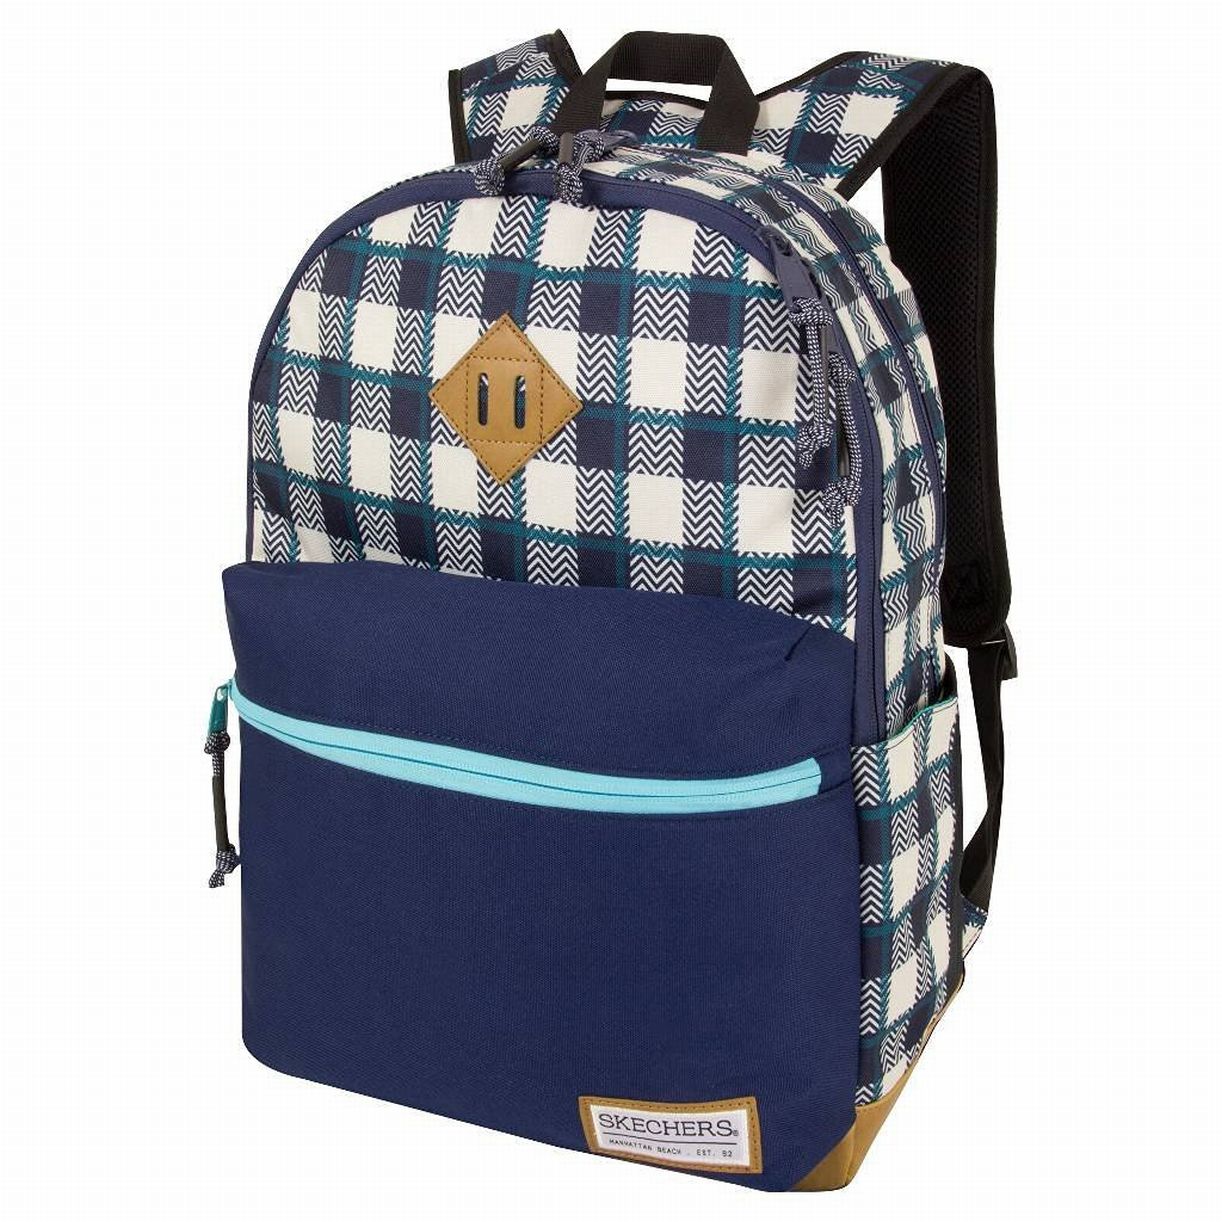 16 Backpack - Navy Plaid Sport School Travel Pack - image 1 of 1